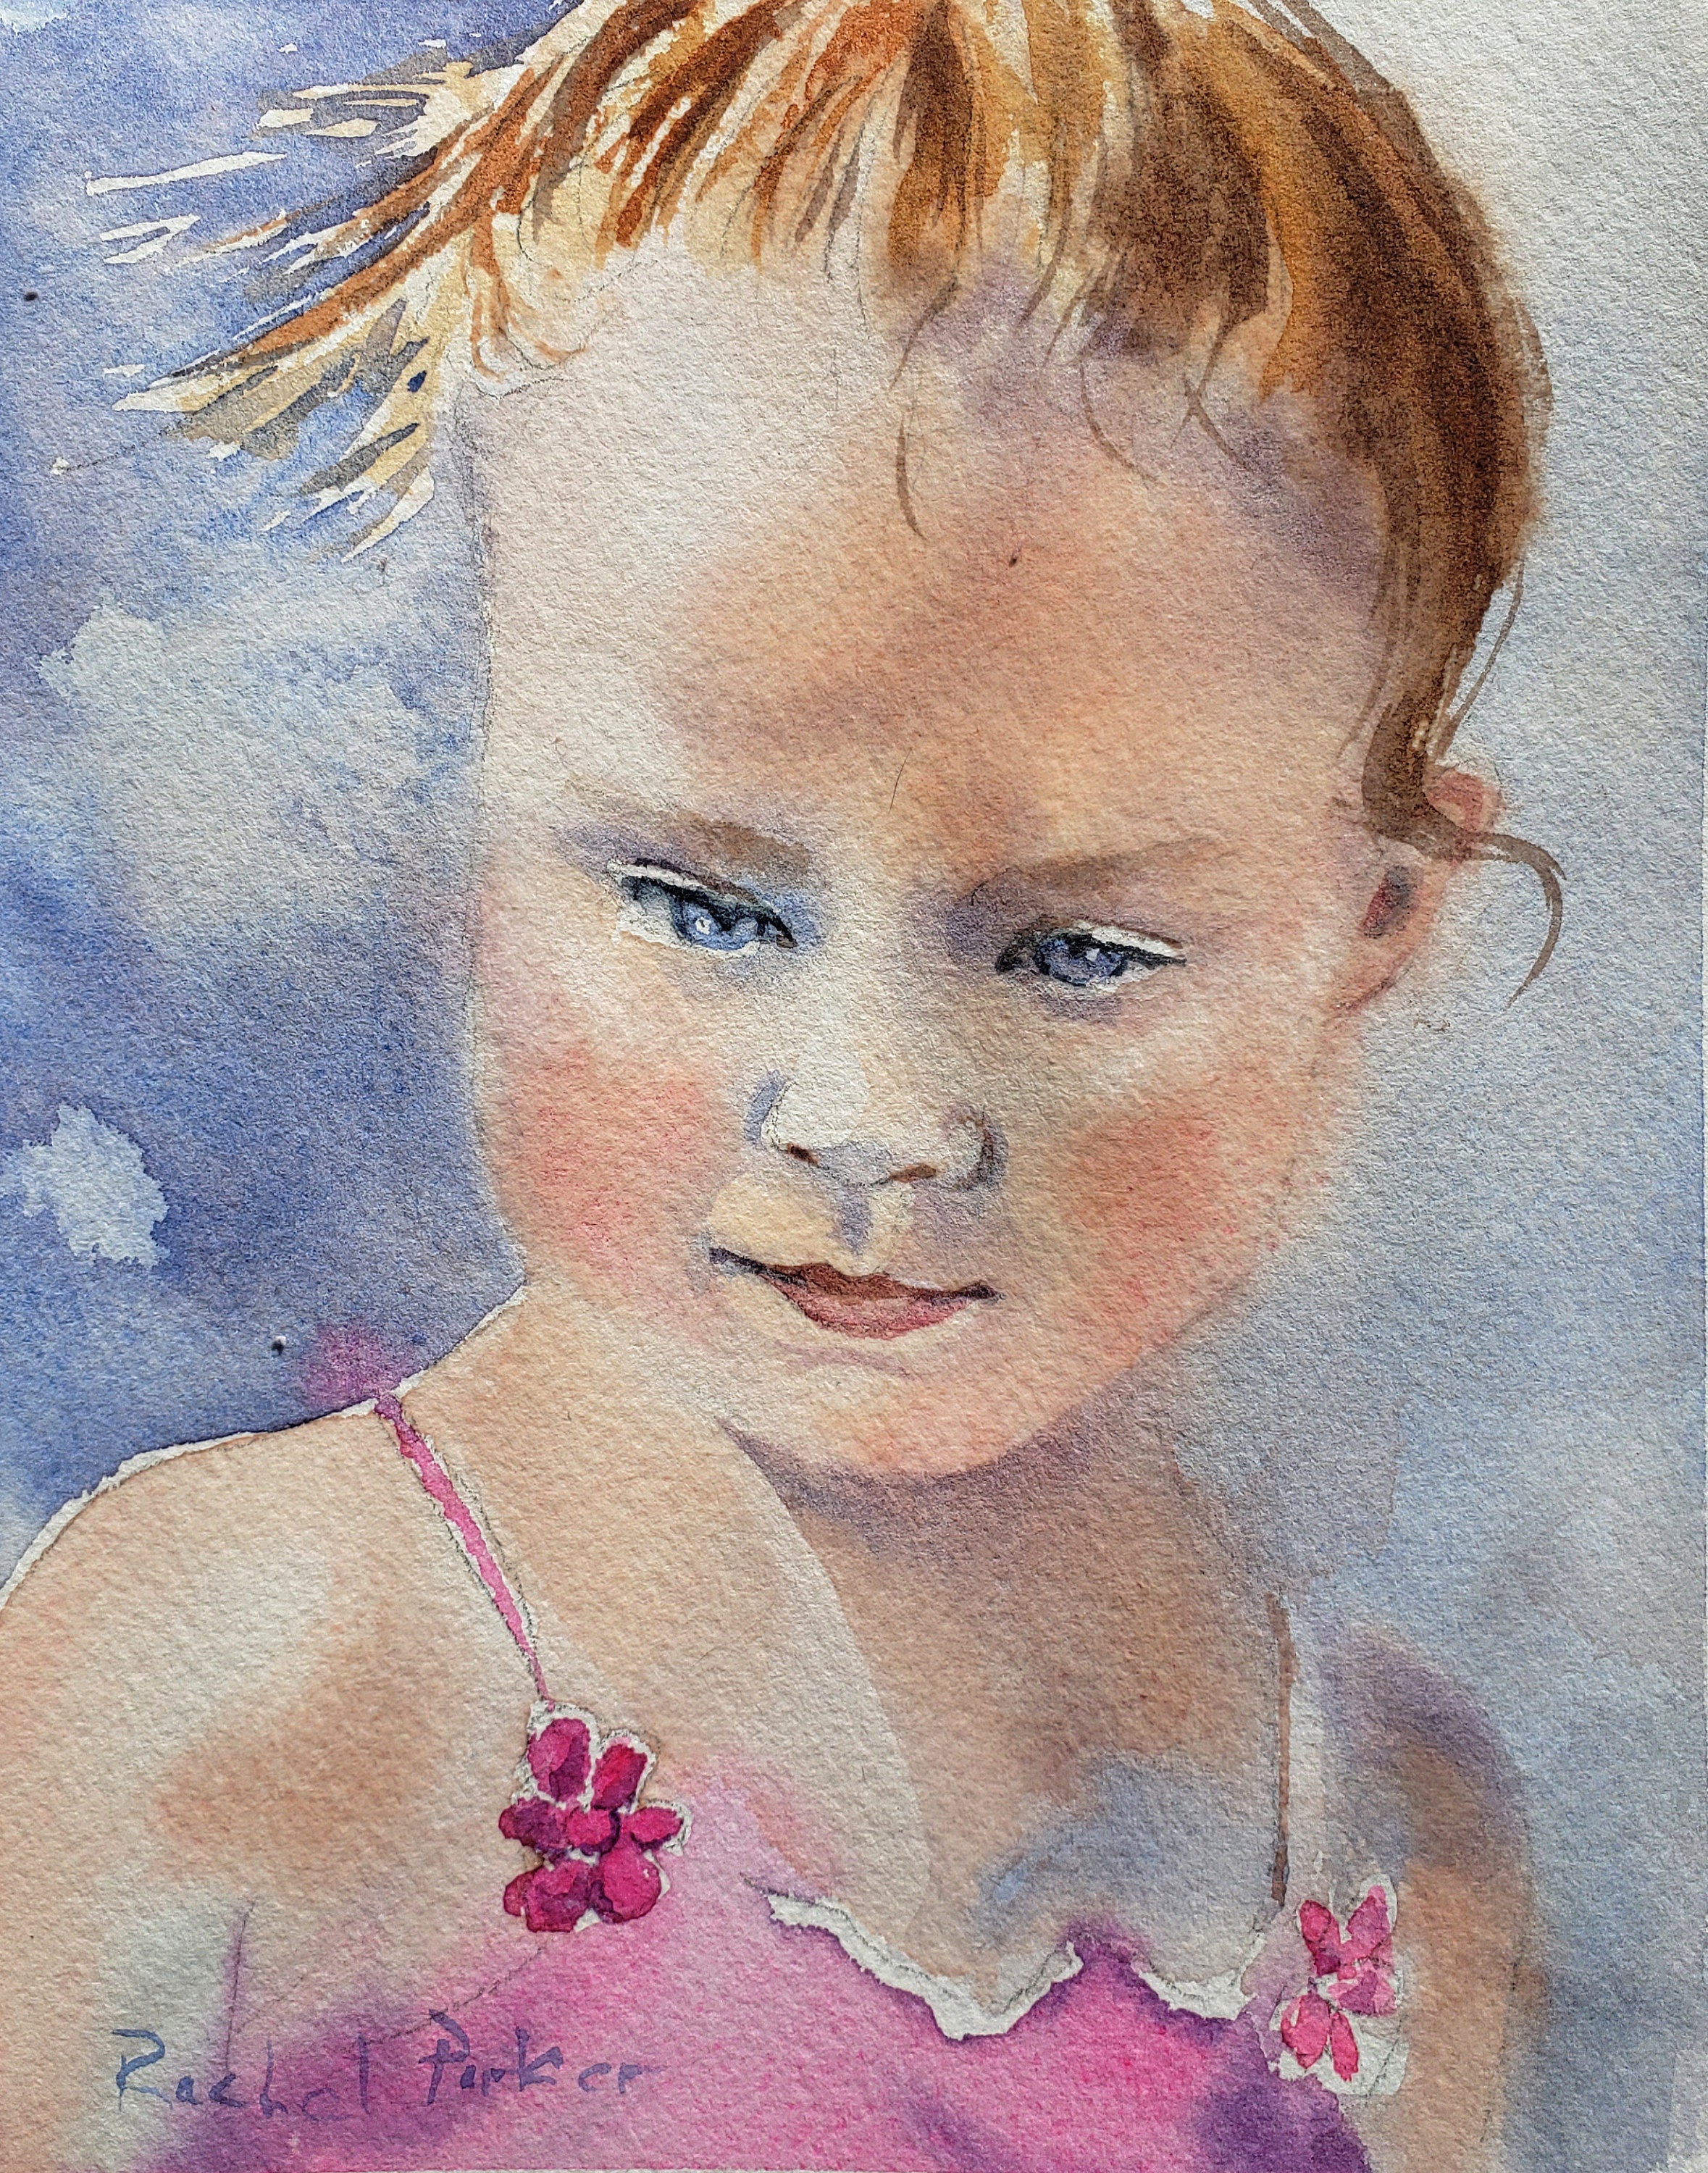 watercolor portrait tutorial